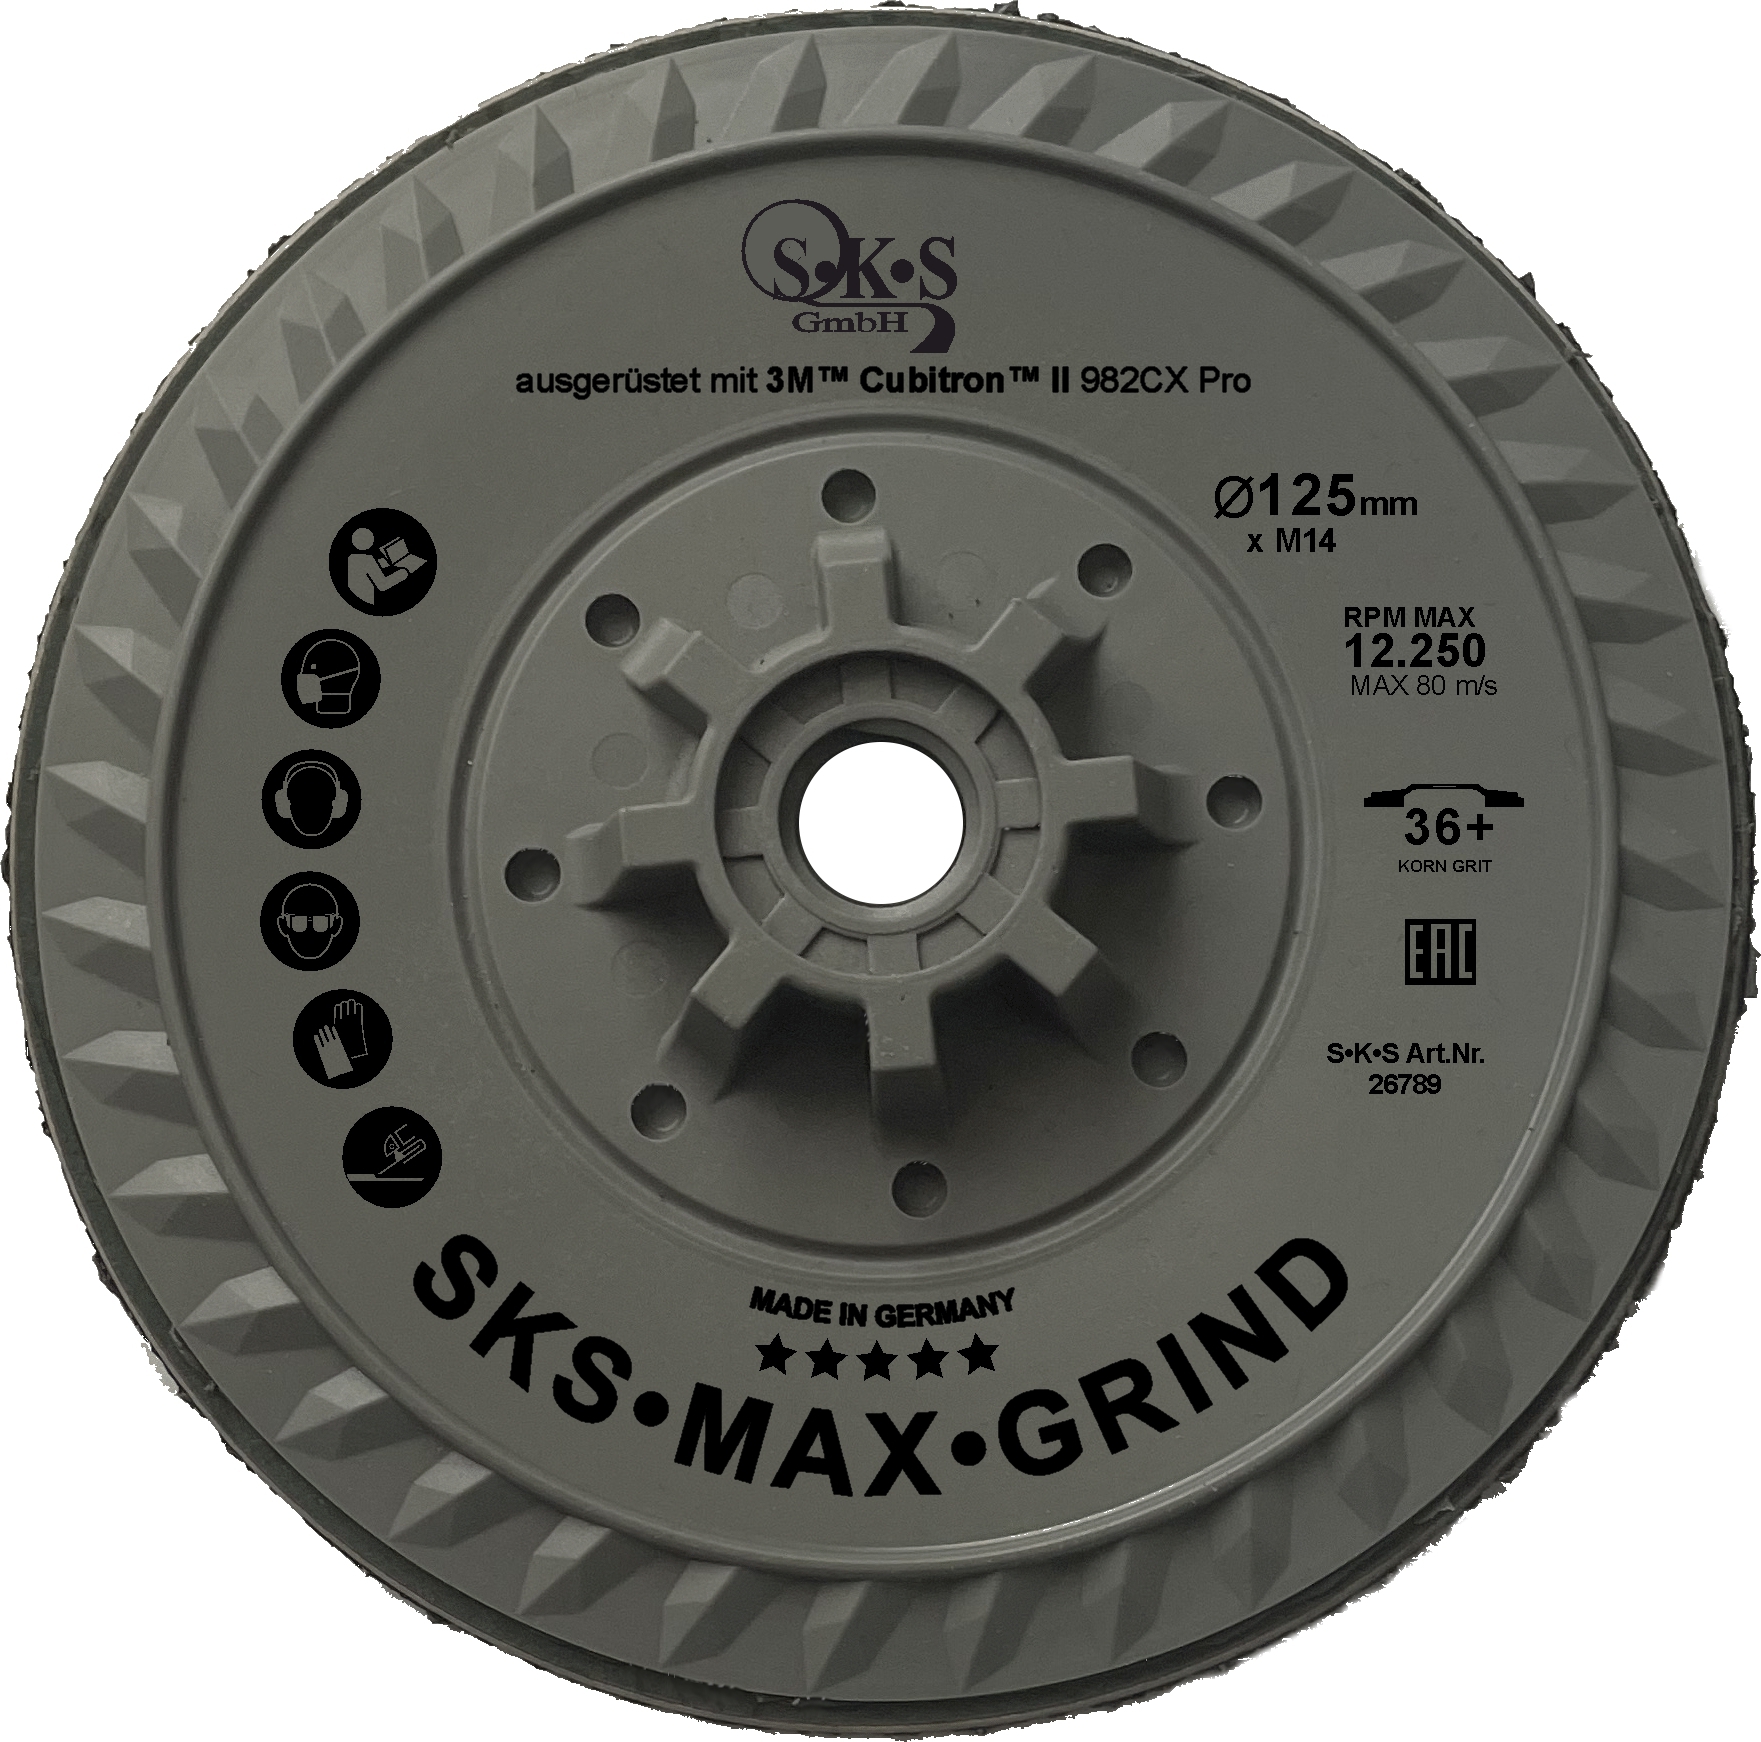 S-K-S Max Grind, 3M Cubitron II Disque fibre 982CX Pro, 125mm, grain 36+, avec logements filetés M14